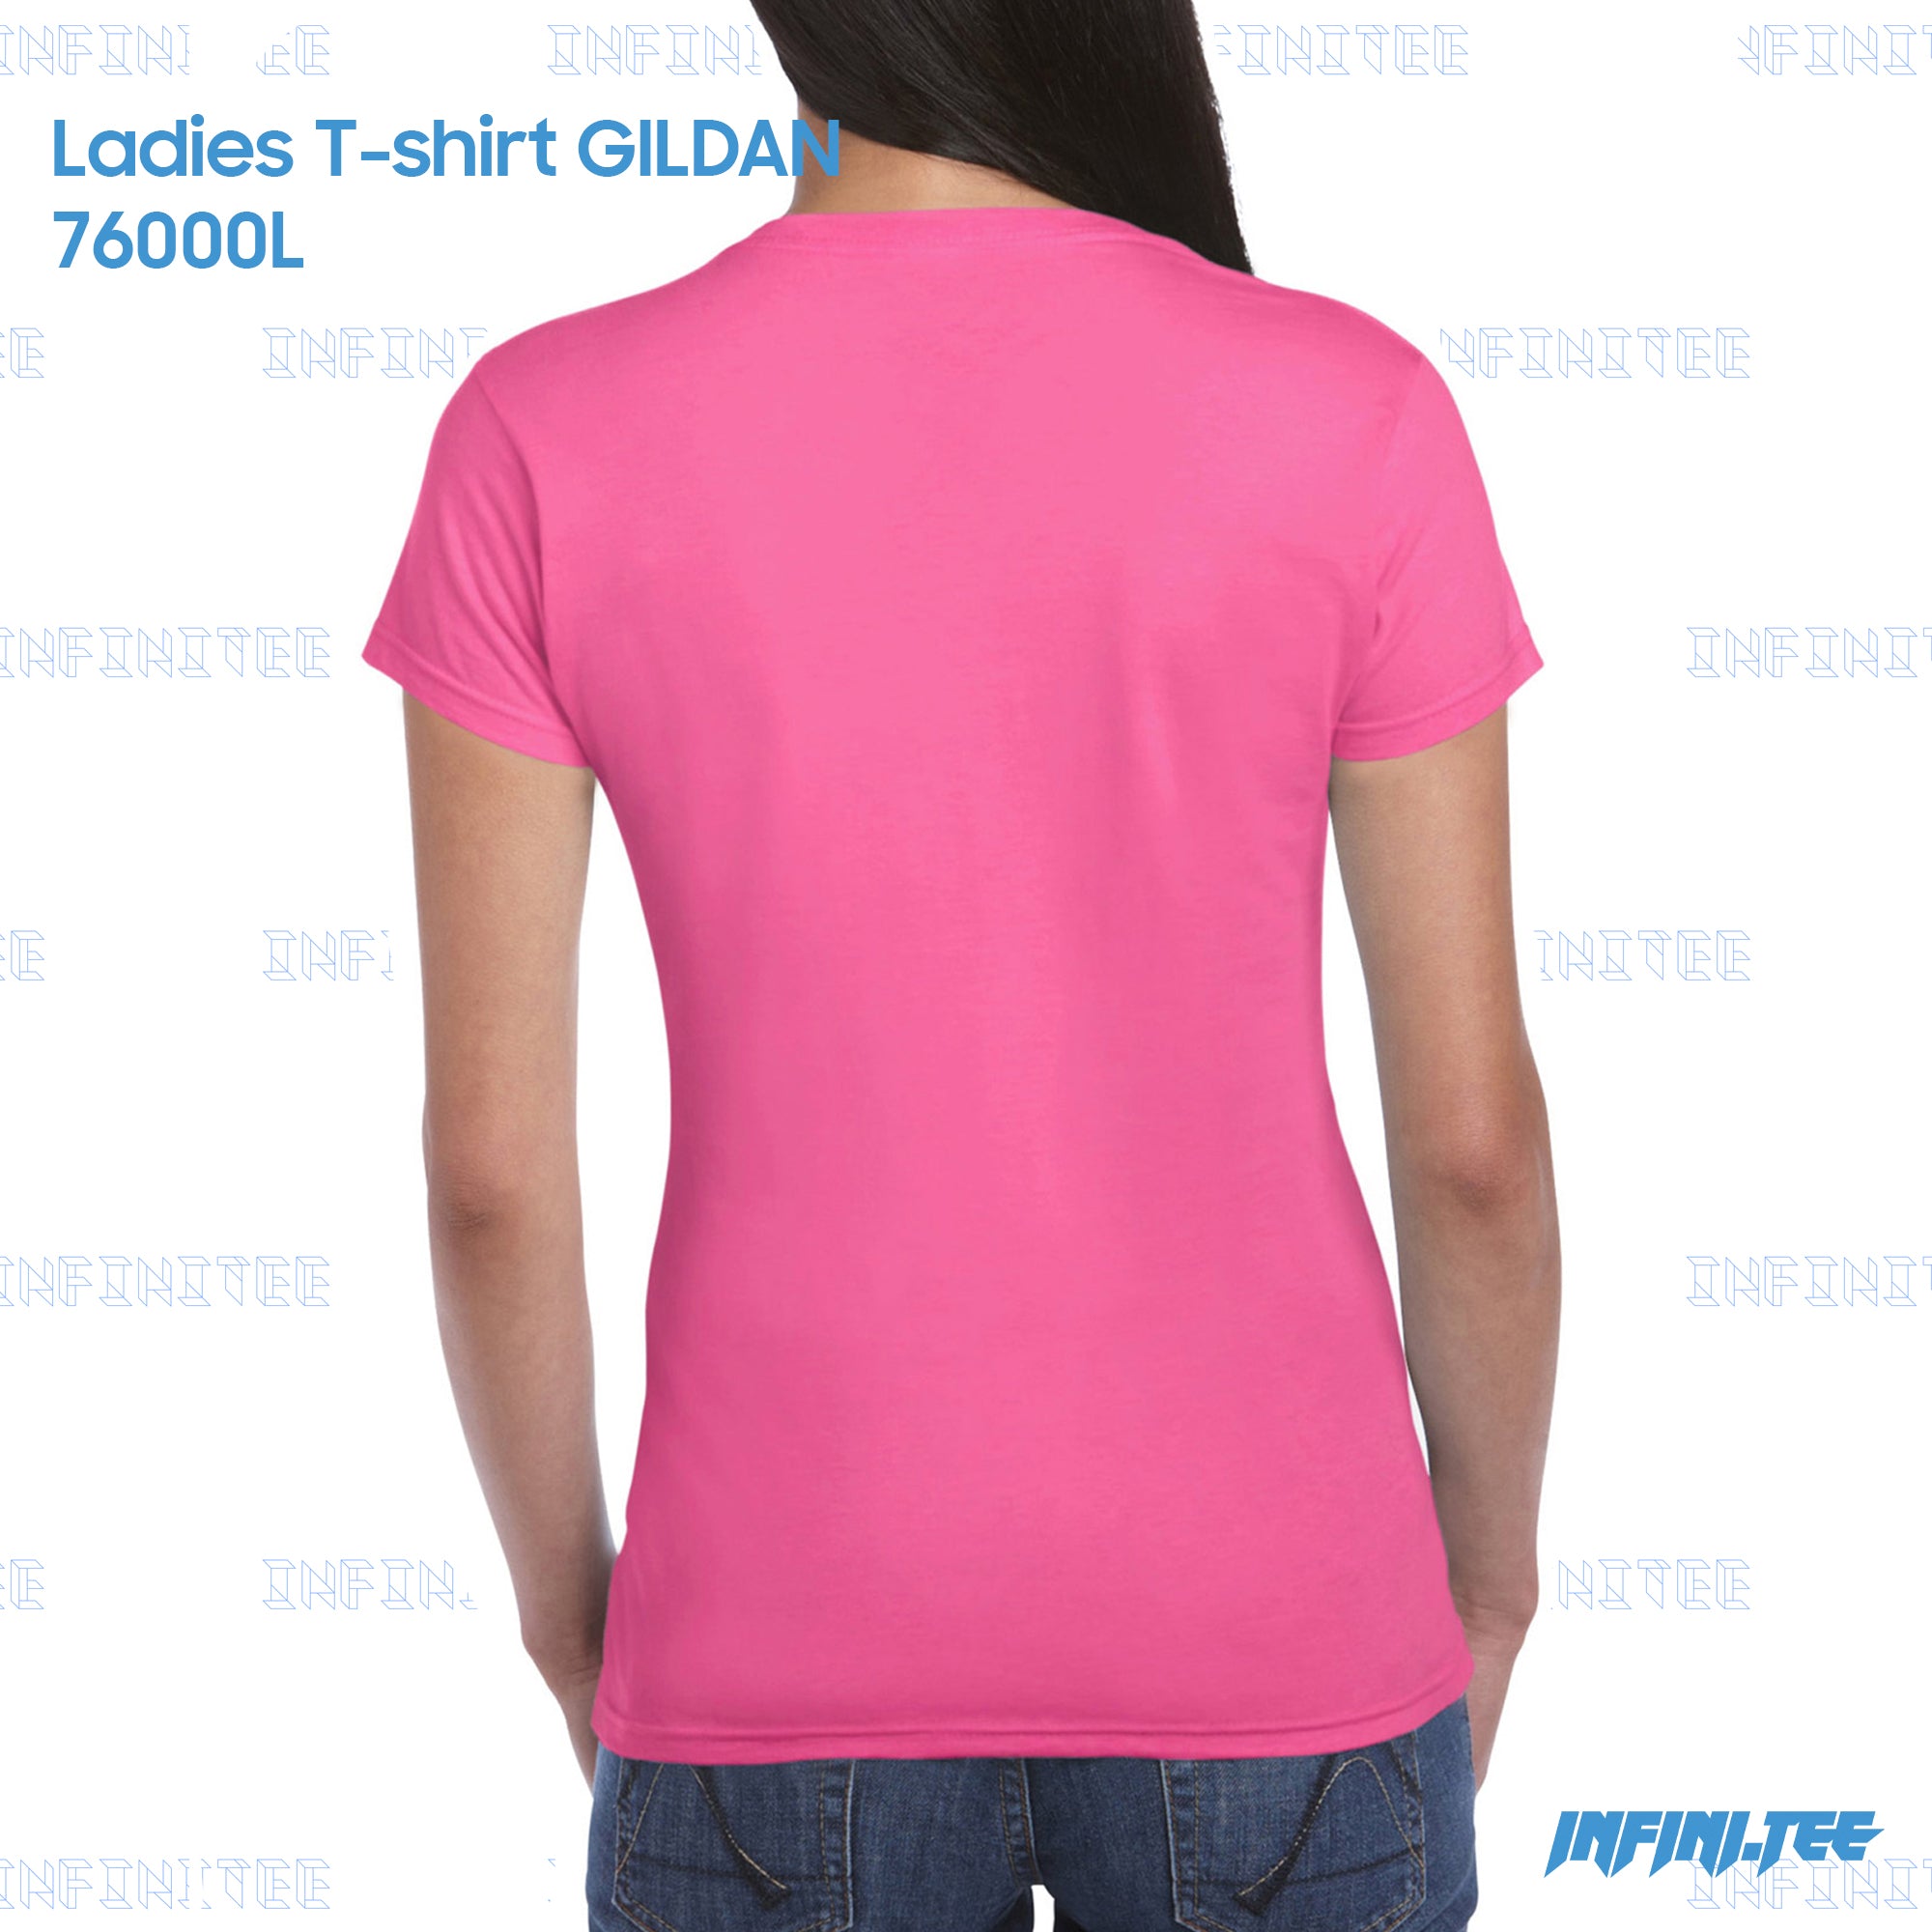 Ladies T-shirt 76000L GILDAN - HELICONIA